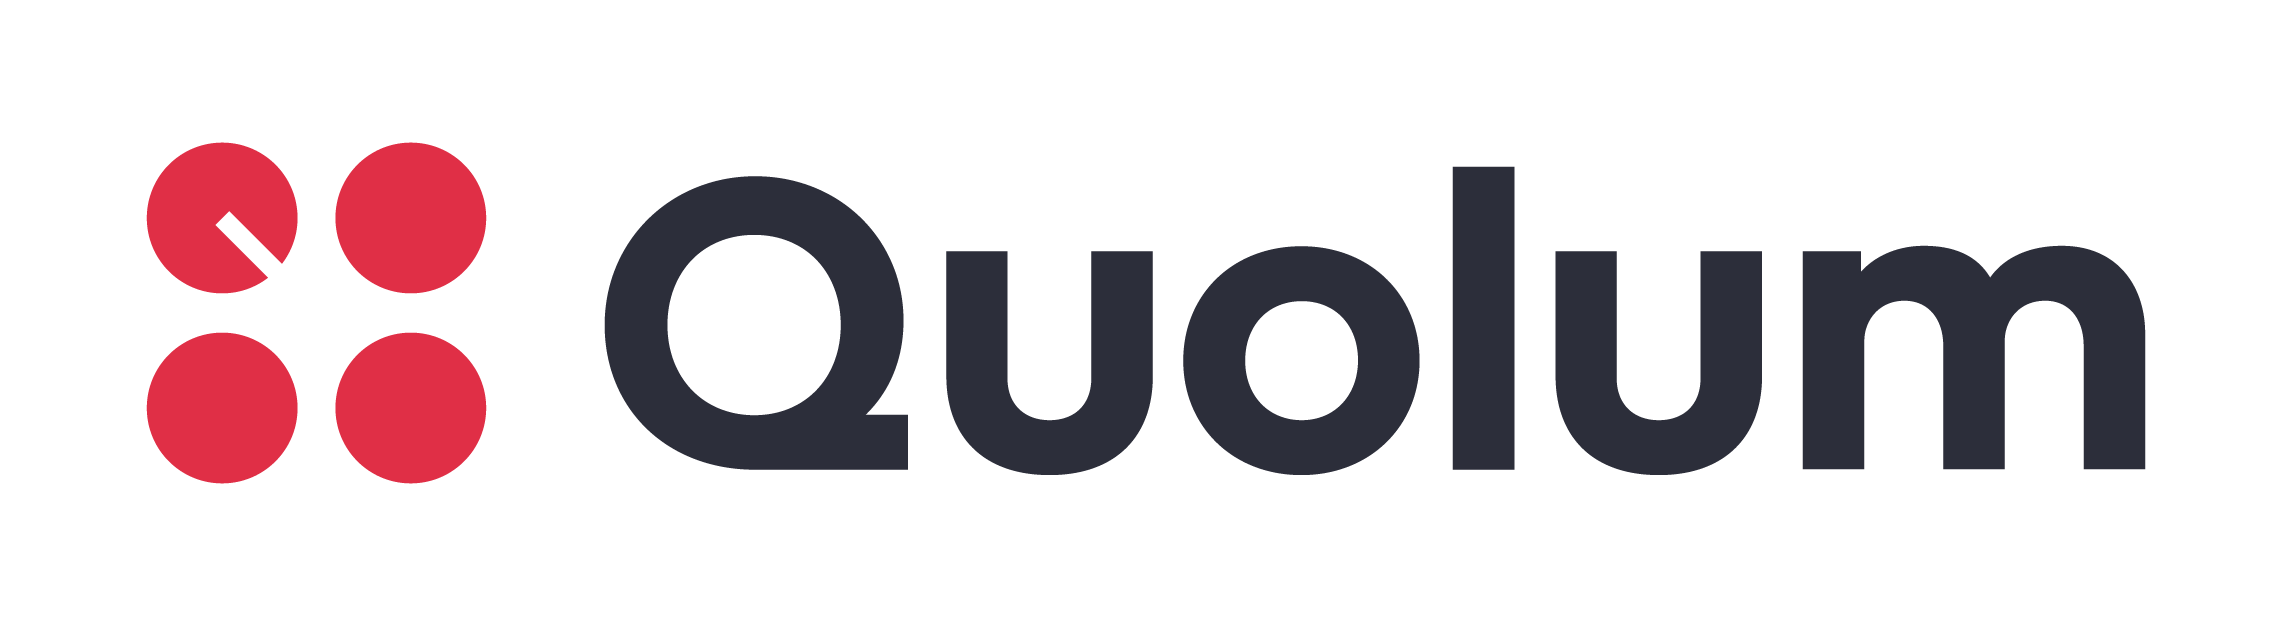 Quolum-Logo-RGB-COLOR.png